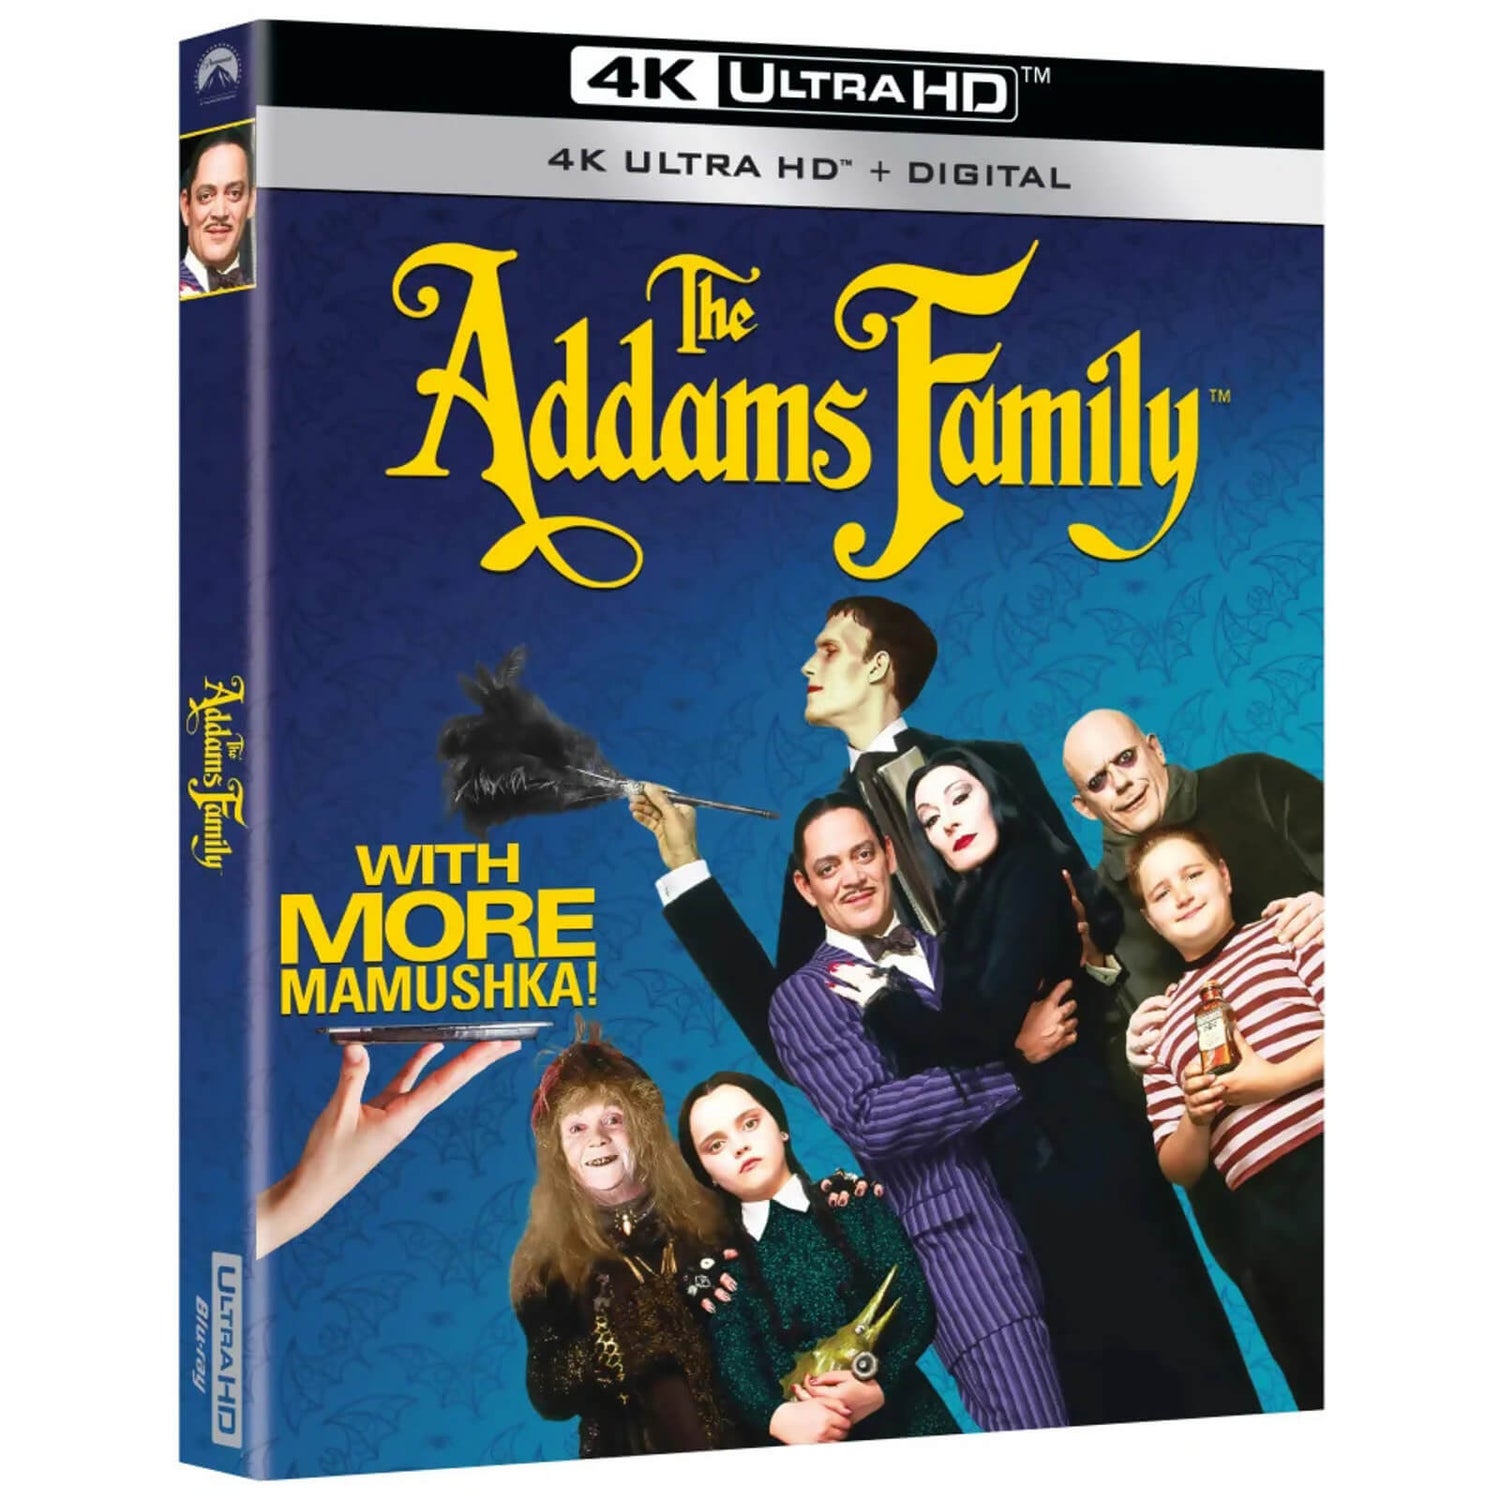 The Addams Family - 4K Ultra HD